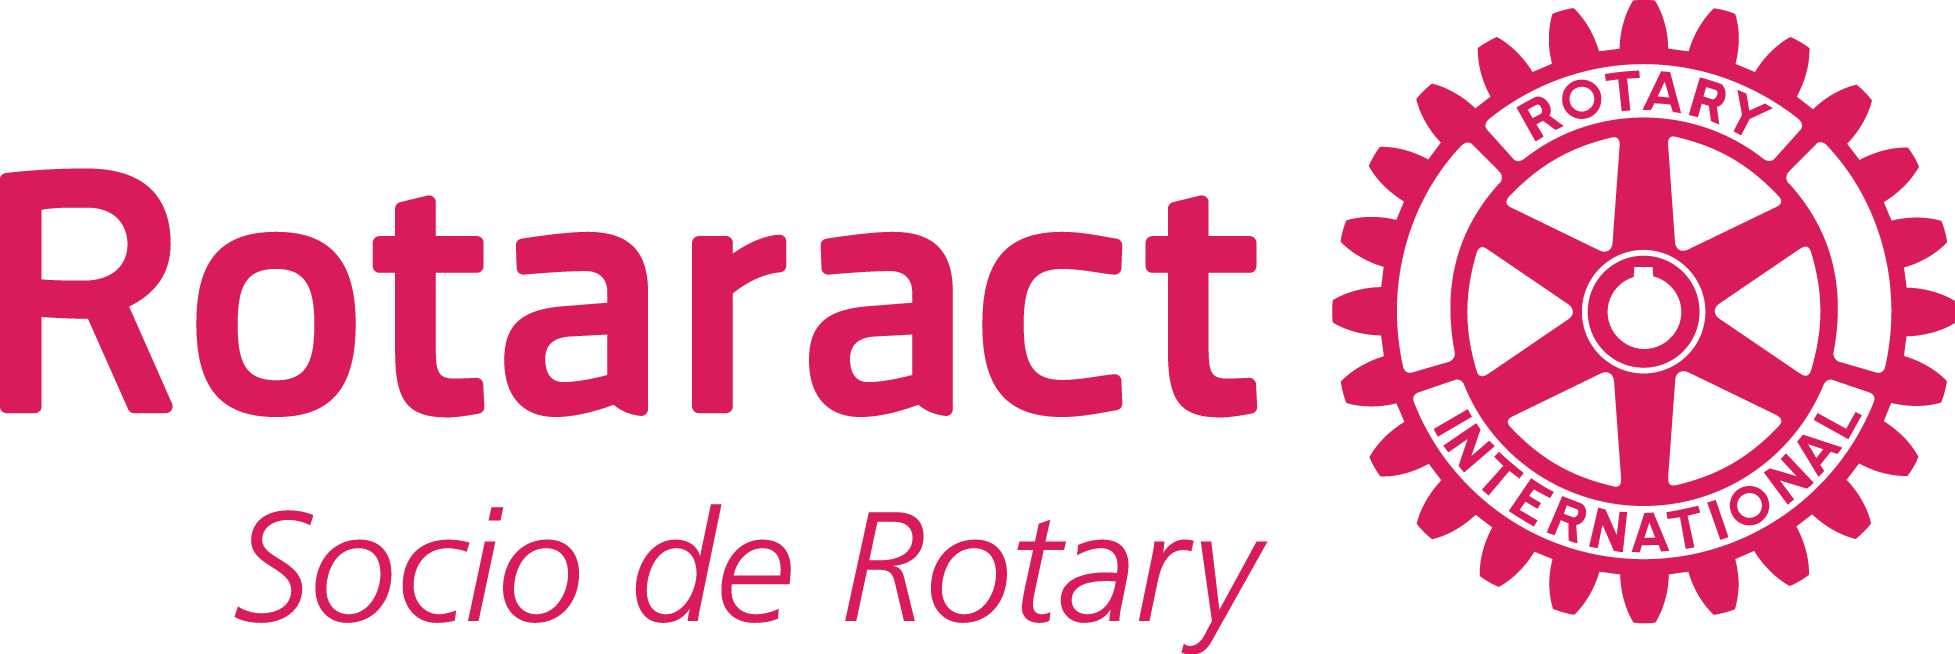 Resultado de imagen para rotaract logo